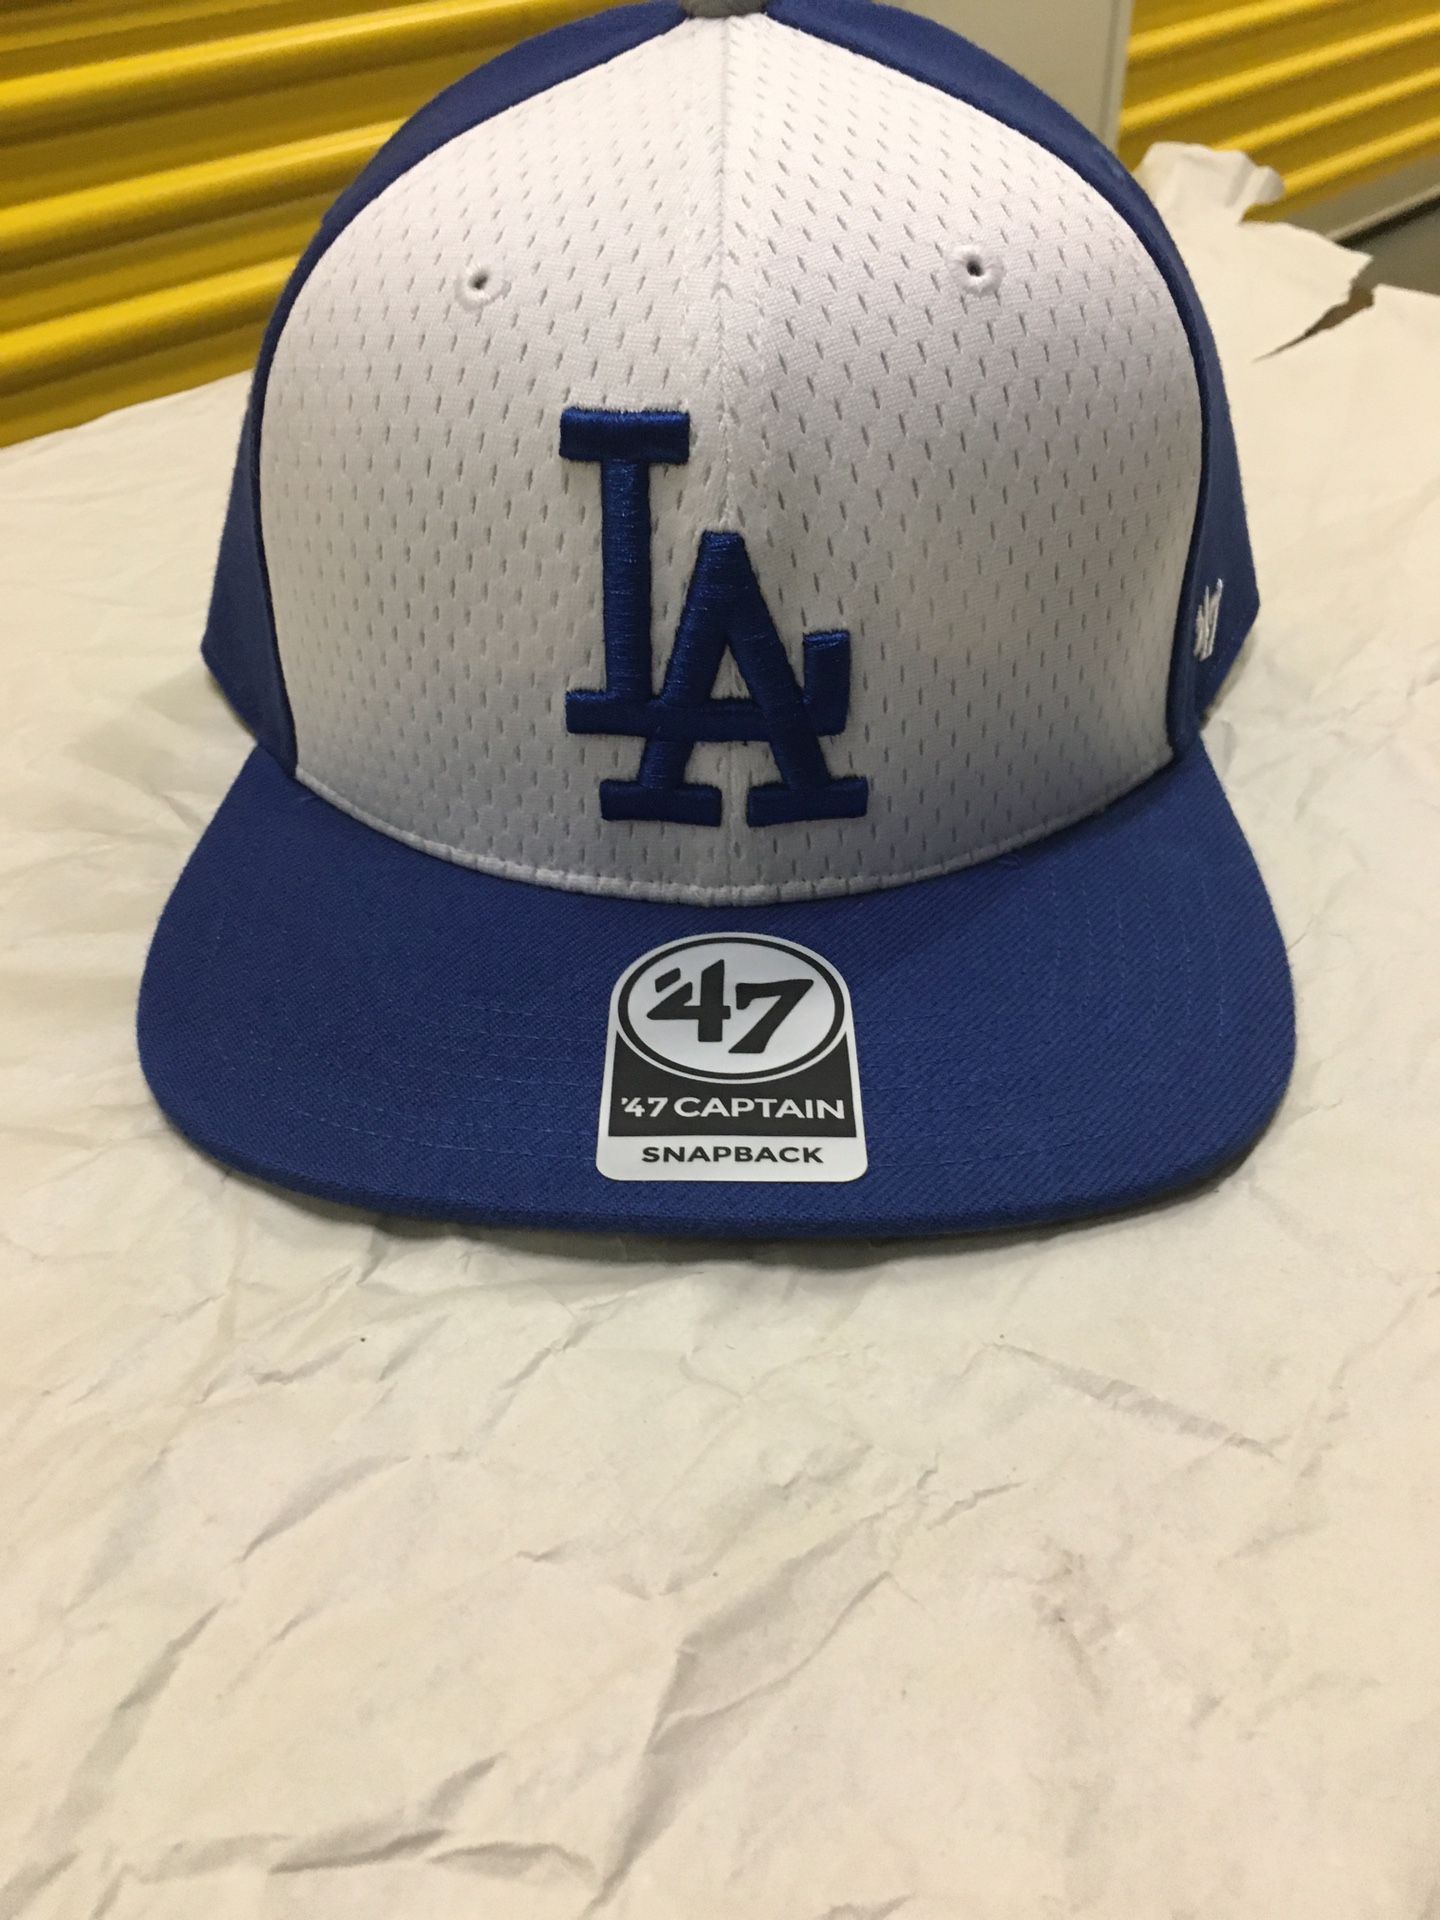 Dodgers SnapBack hat